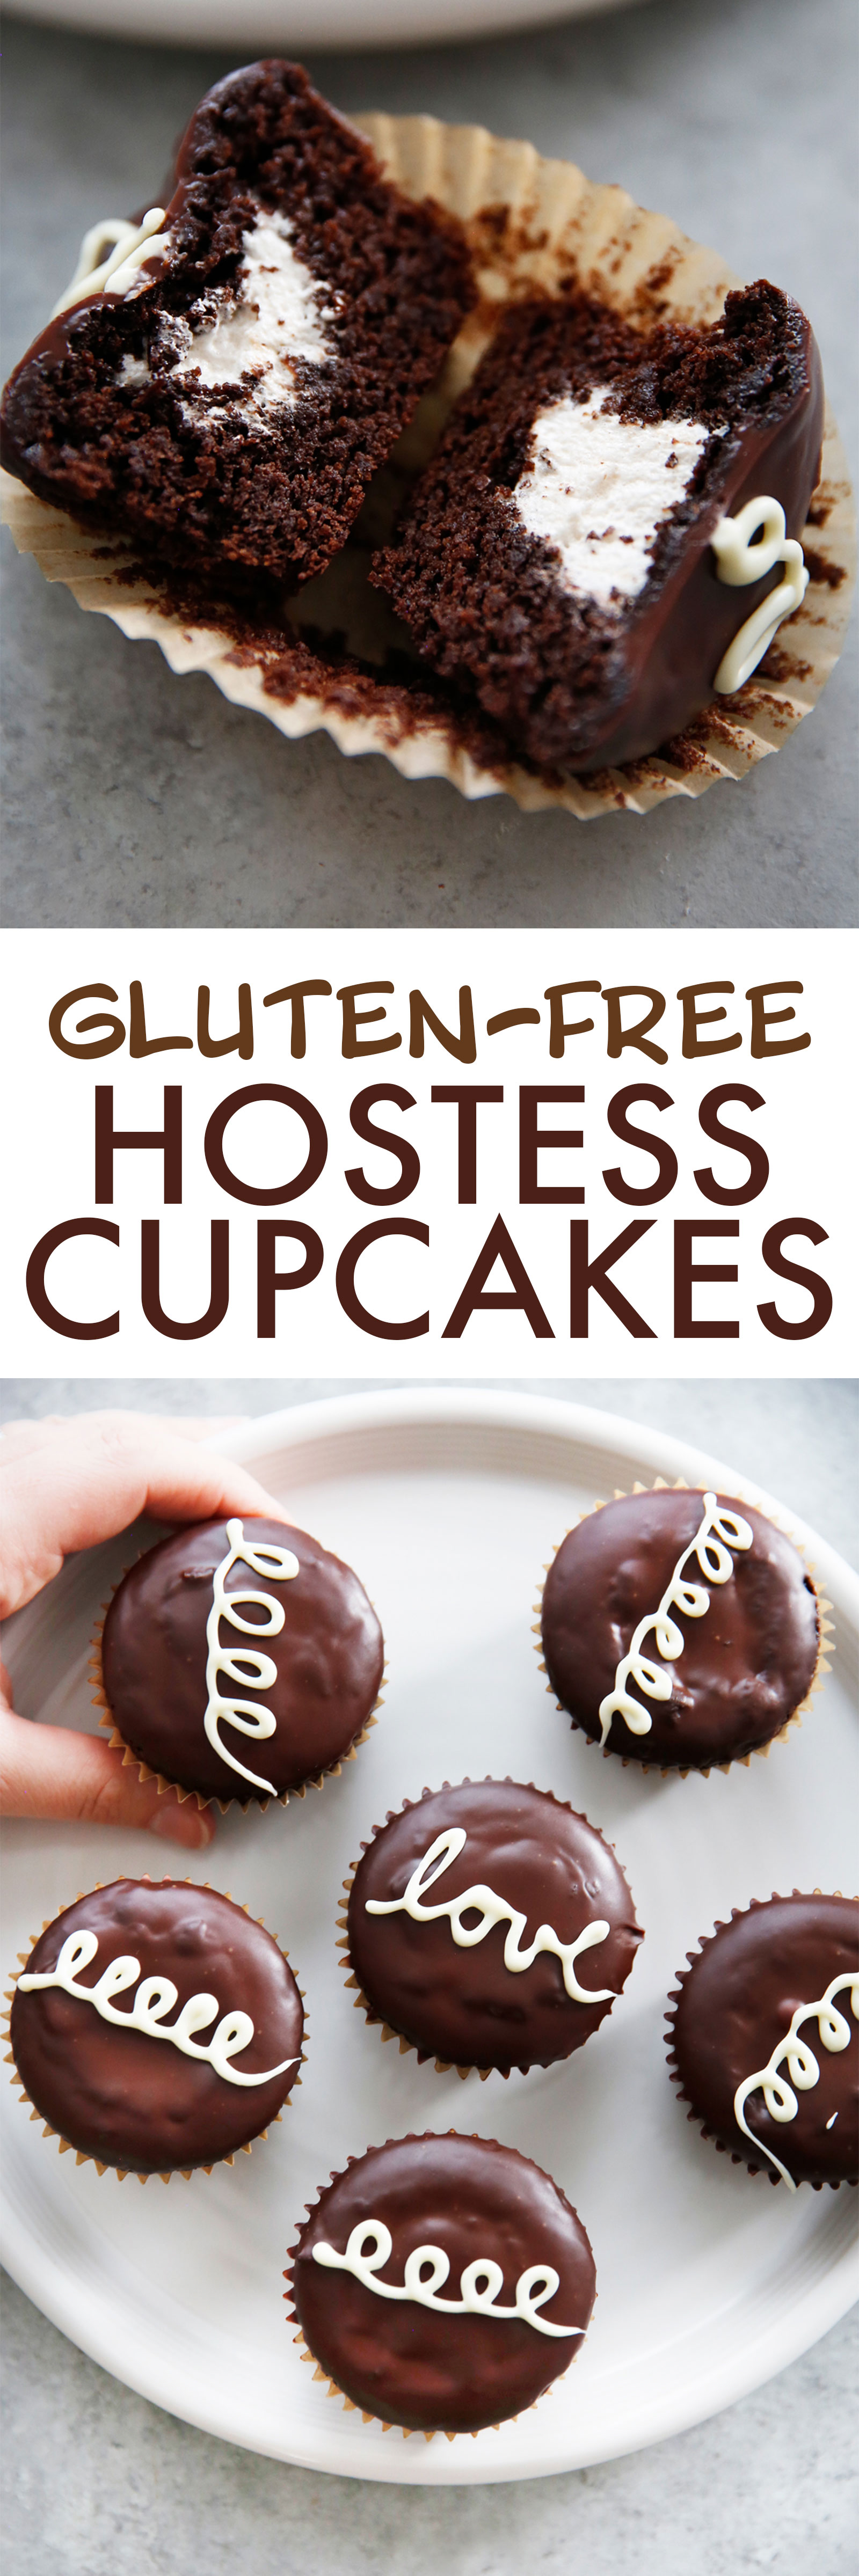 gluten free hostess cupcakes